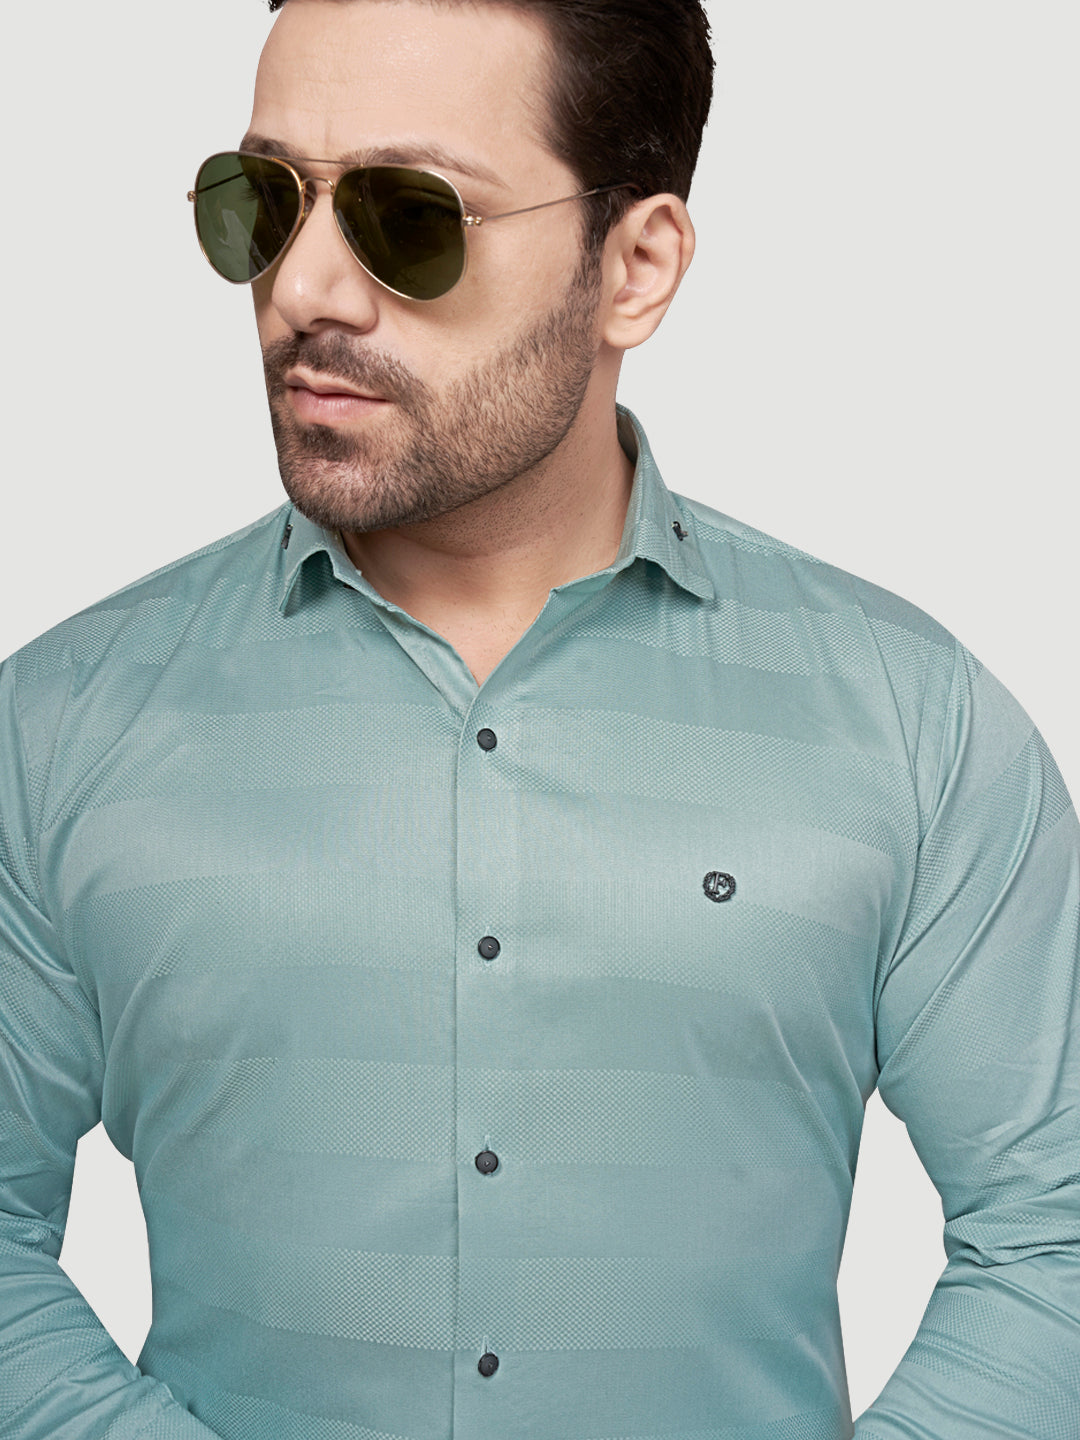 Black and White Men's Designer Shirt with Collar Accessory & Designer Broach Green